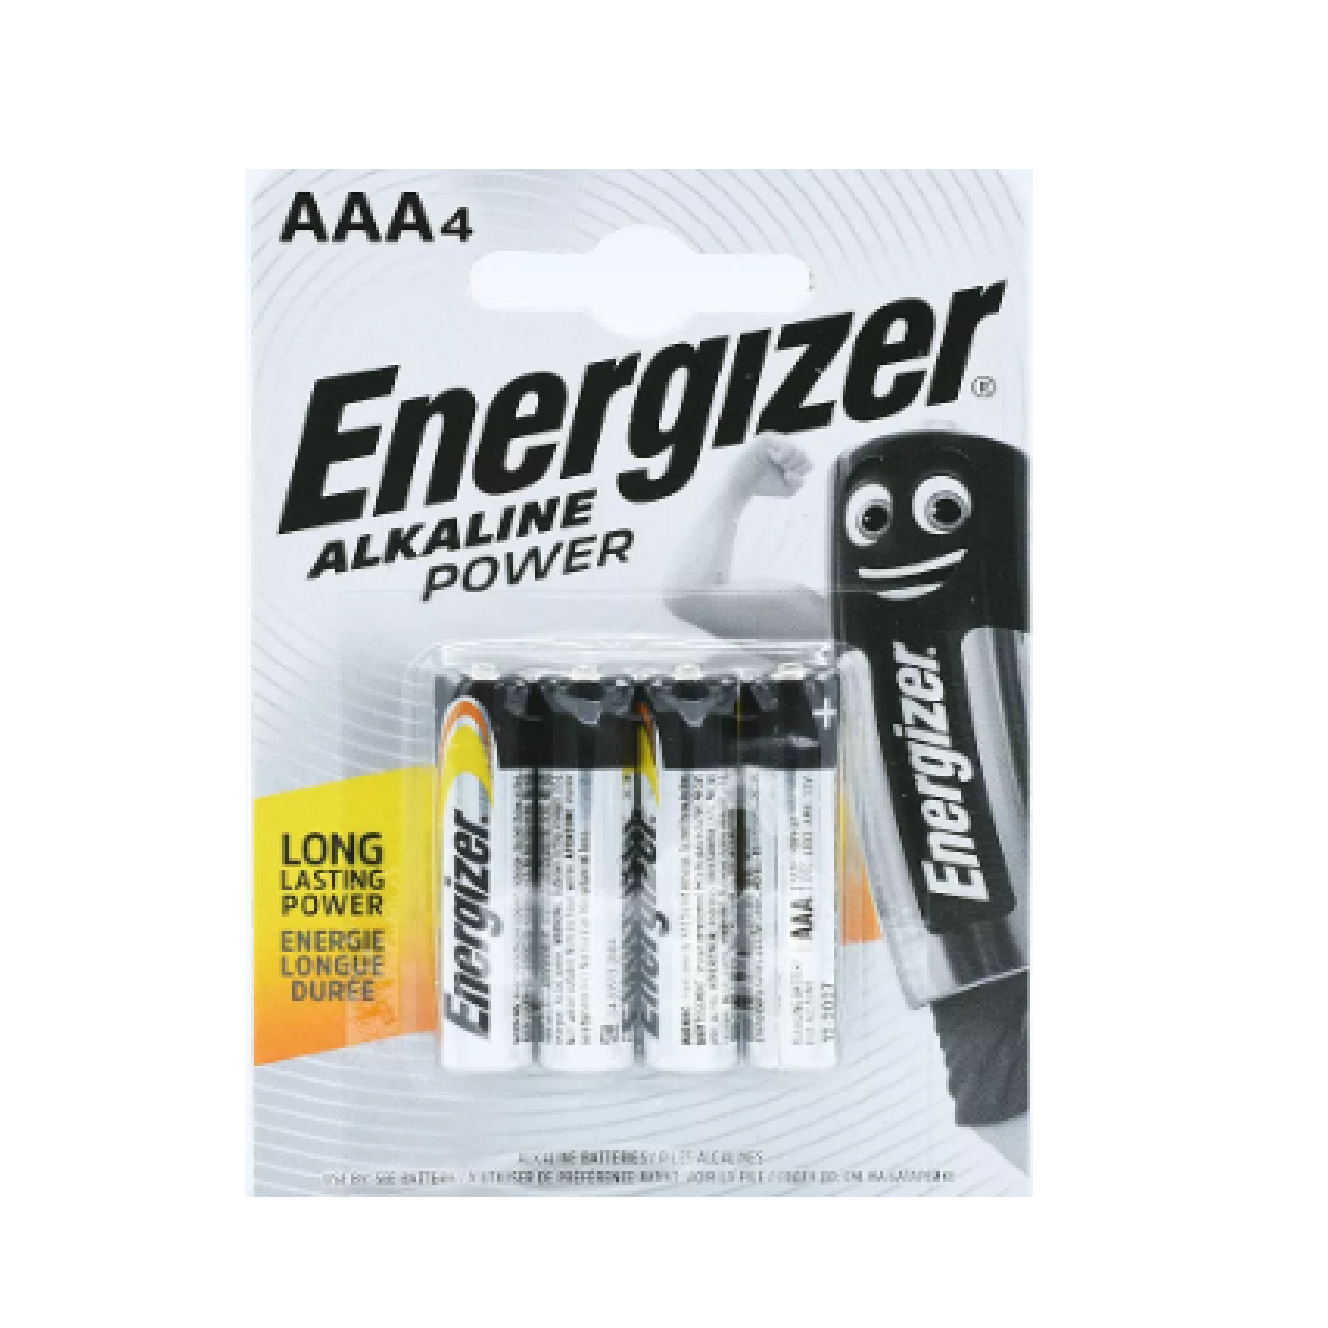 Energizer AAA Alkaline Power Battery 4PC/Pack